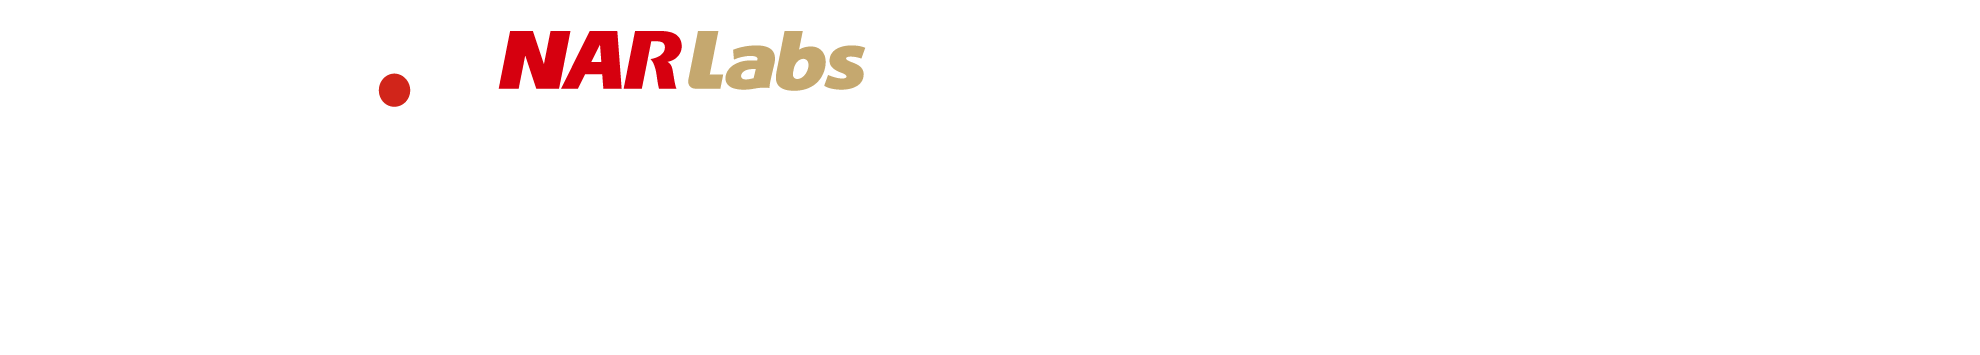 NCHC_logo